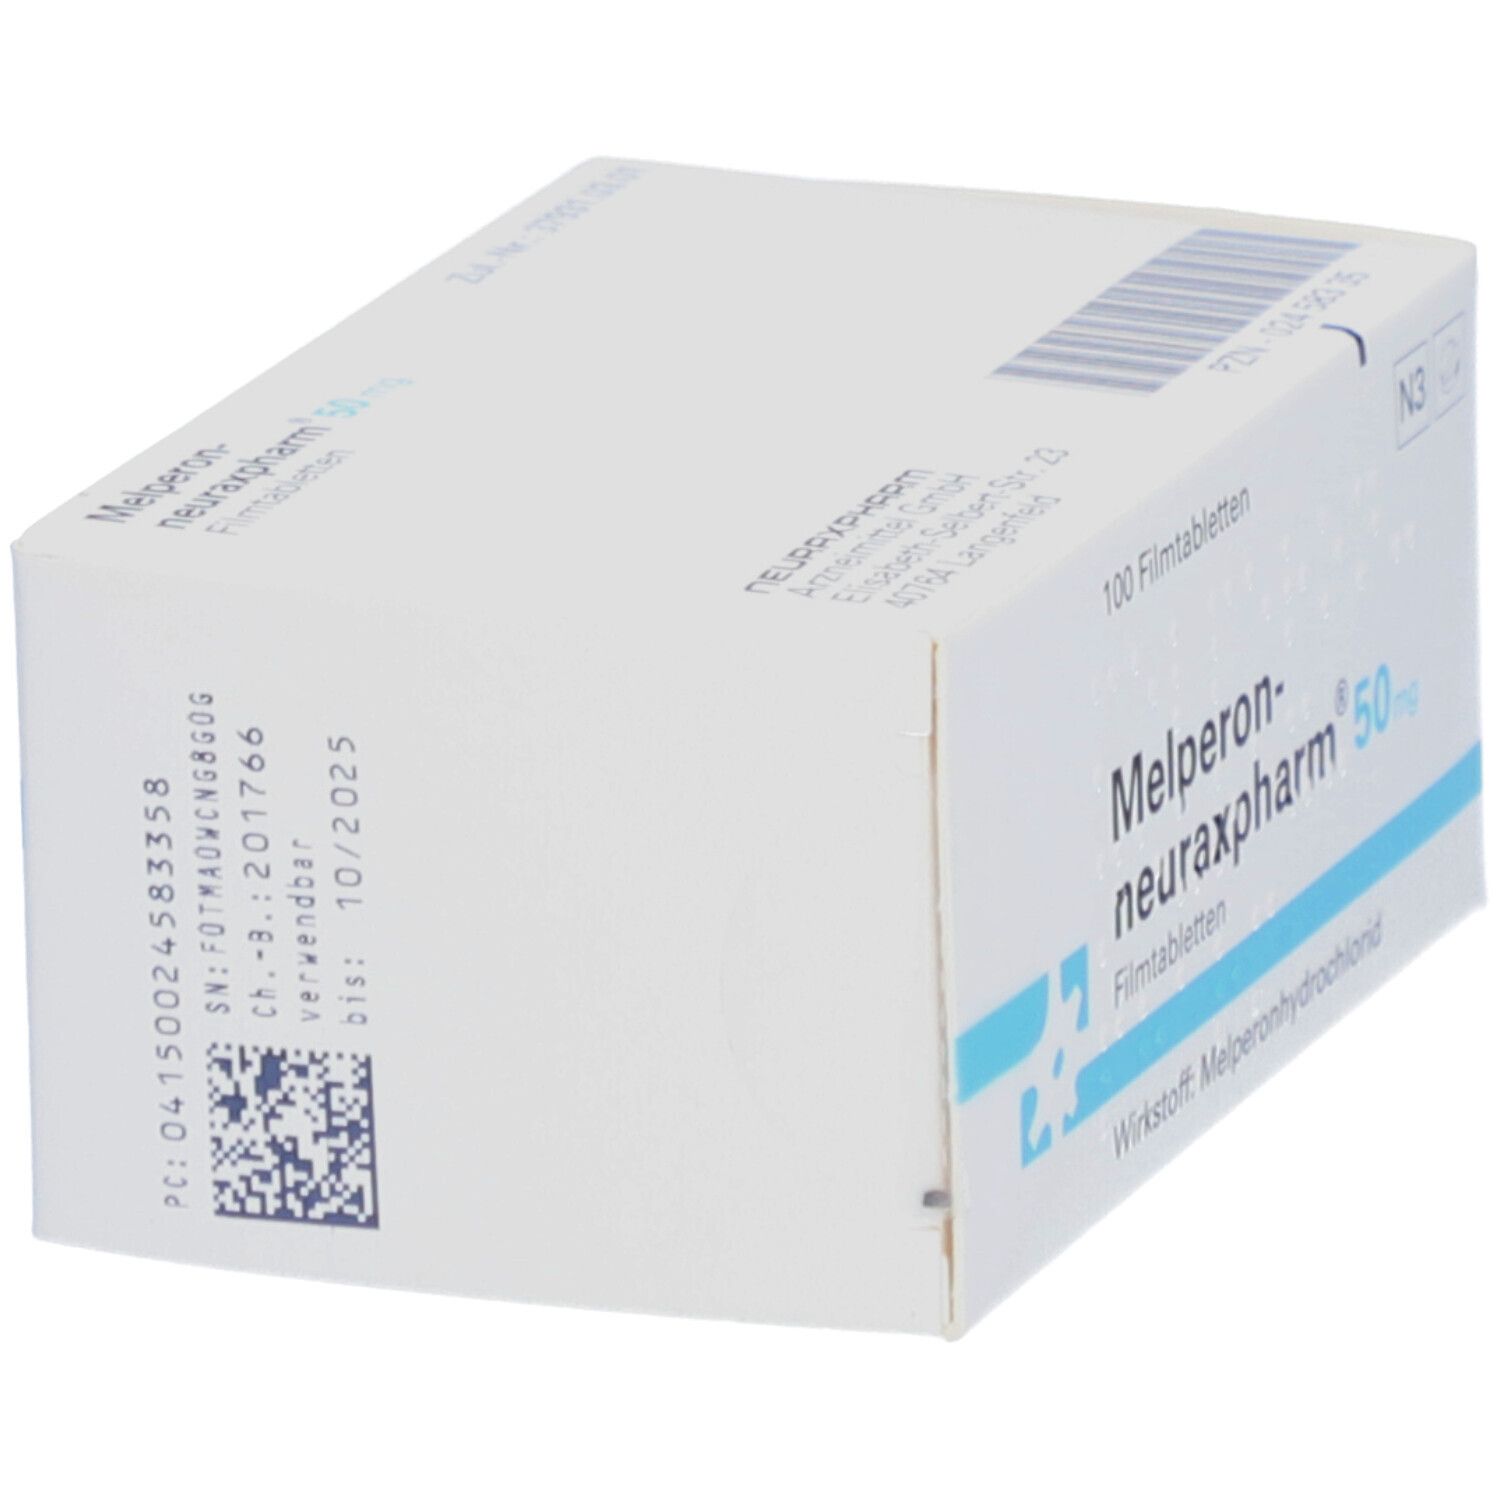 Melperon-neuraxpharm® 50 mg